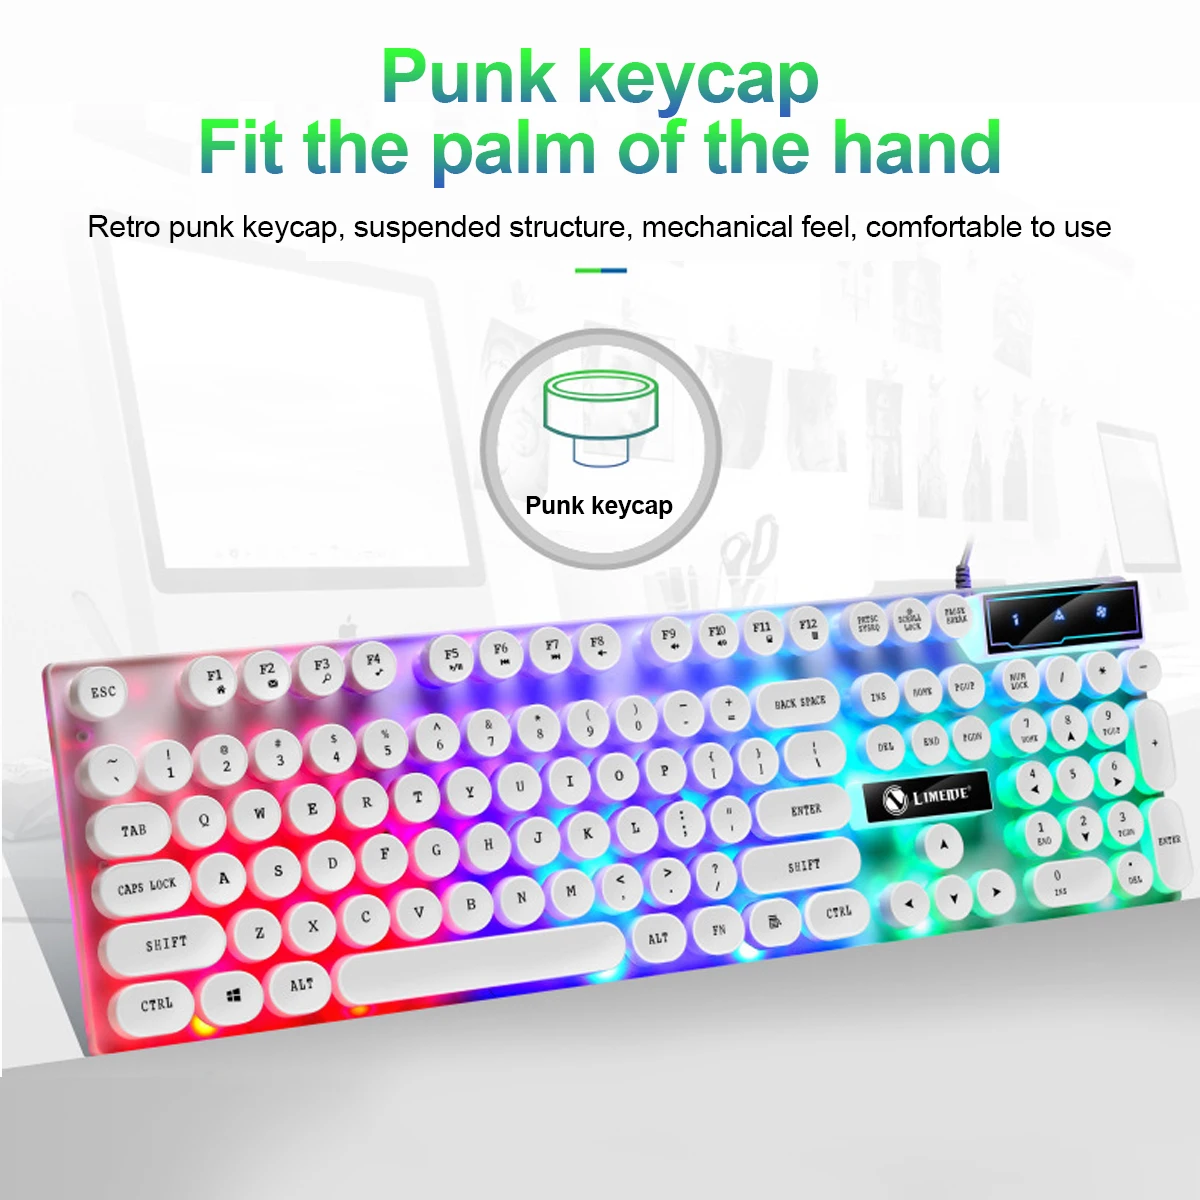 ankndo round punk style keyboard rgb grading gamer keyboard 104 keys round retro keycap key board laptop pc accessories free global shipping